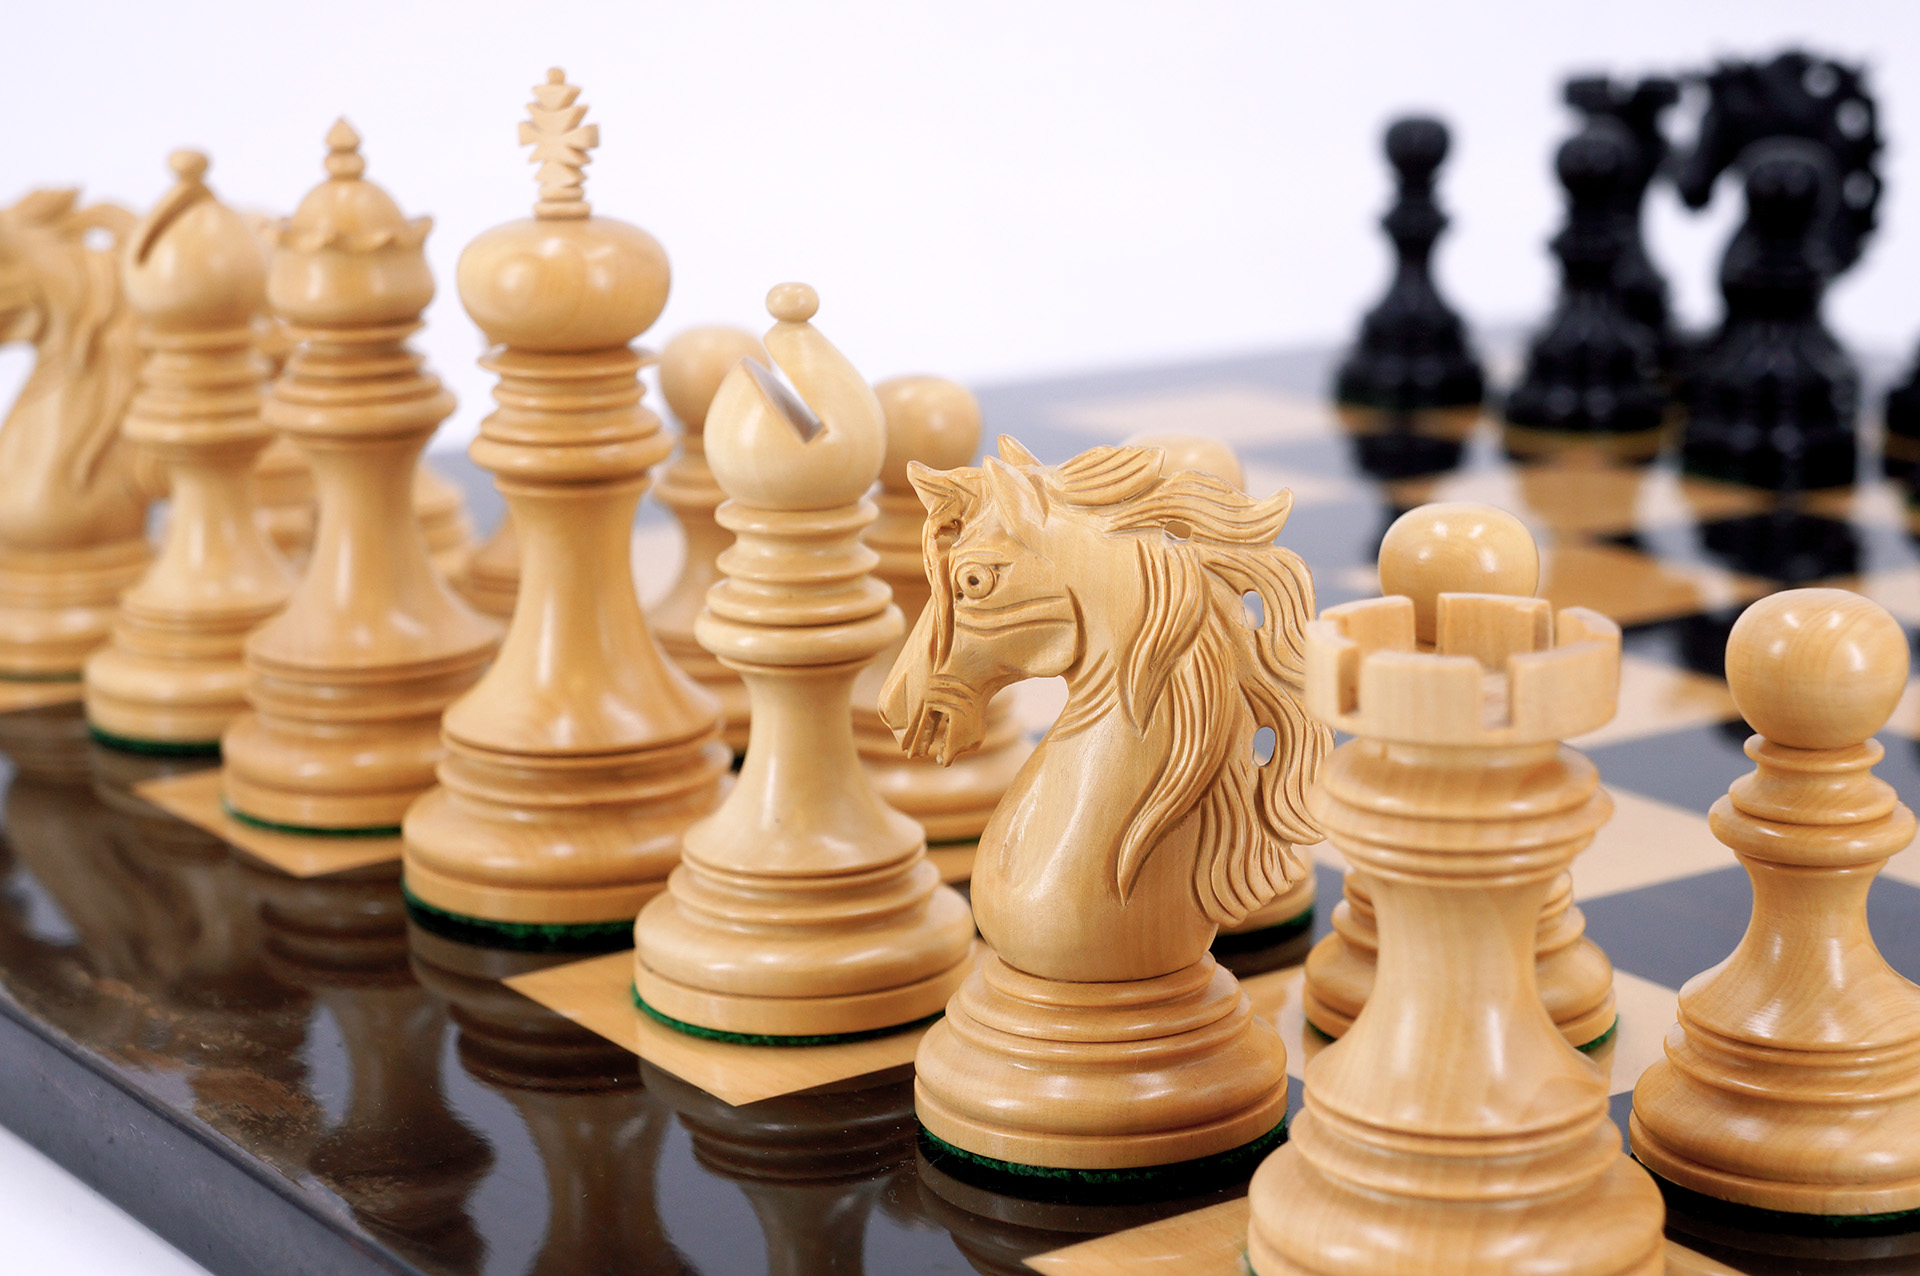 candice 康堤斯进口高档手工实木红木比赛用专业国际象棋 仅棋子